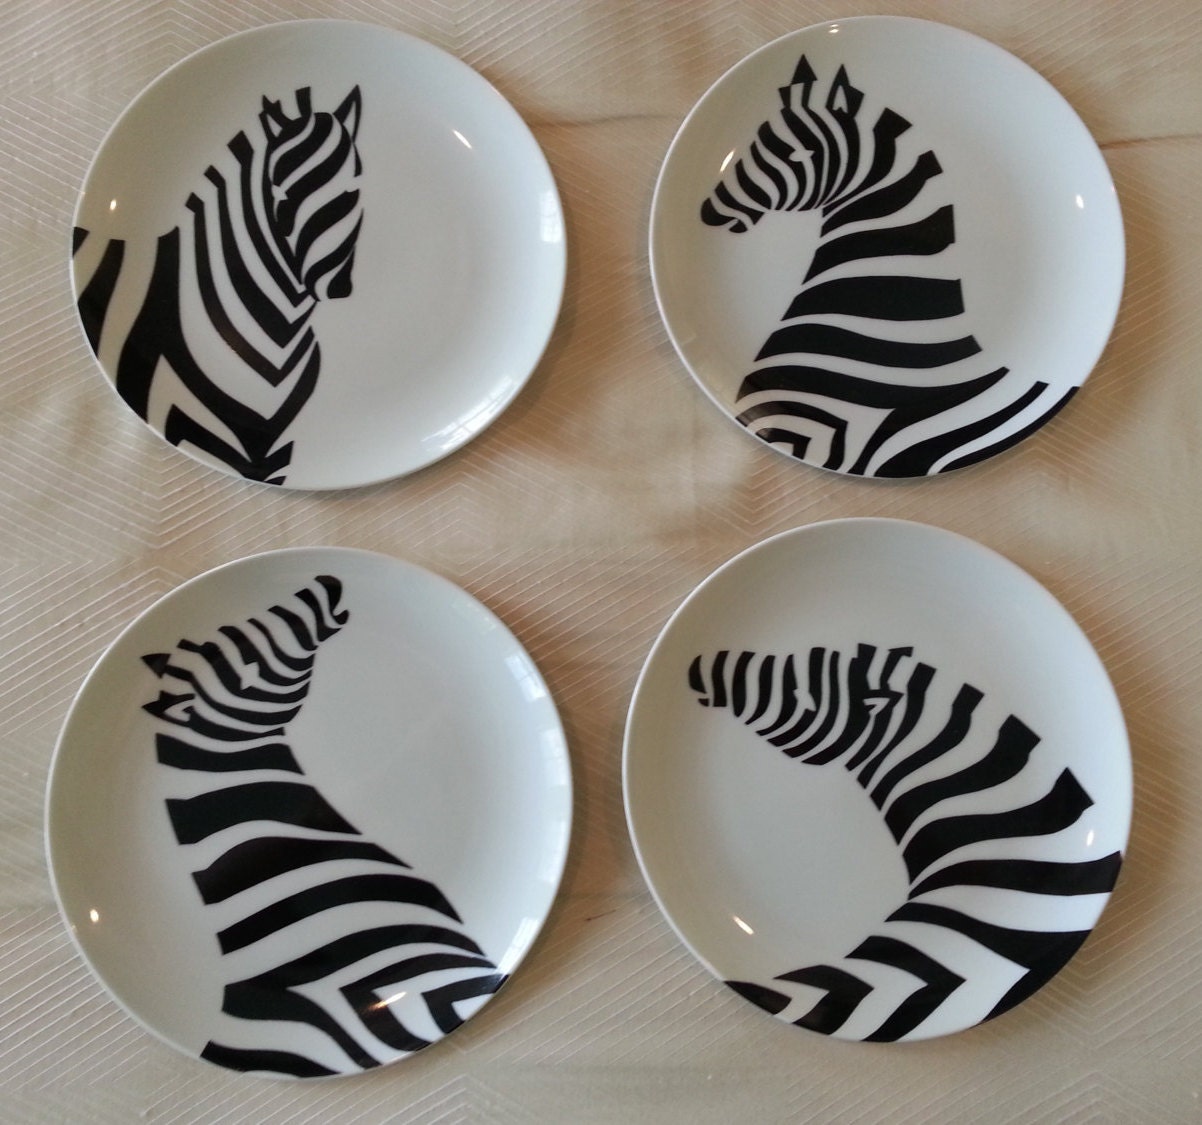 Porcelain Zebra Salad/Dessert Plates by Fitz And Floyd